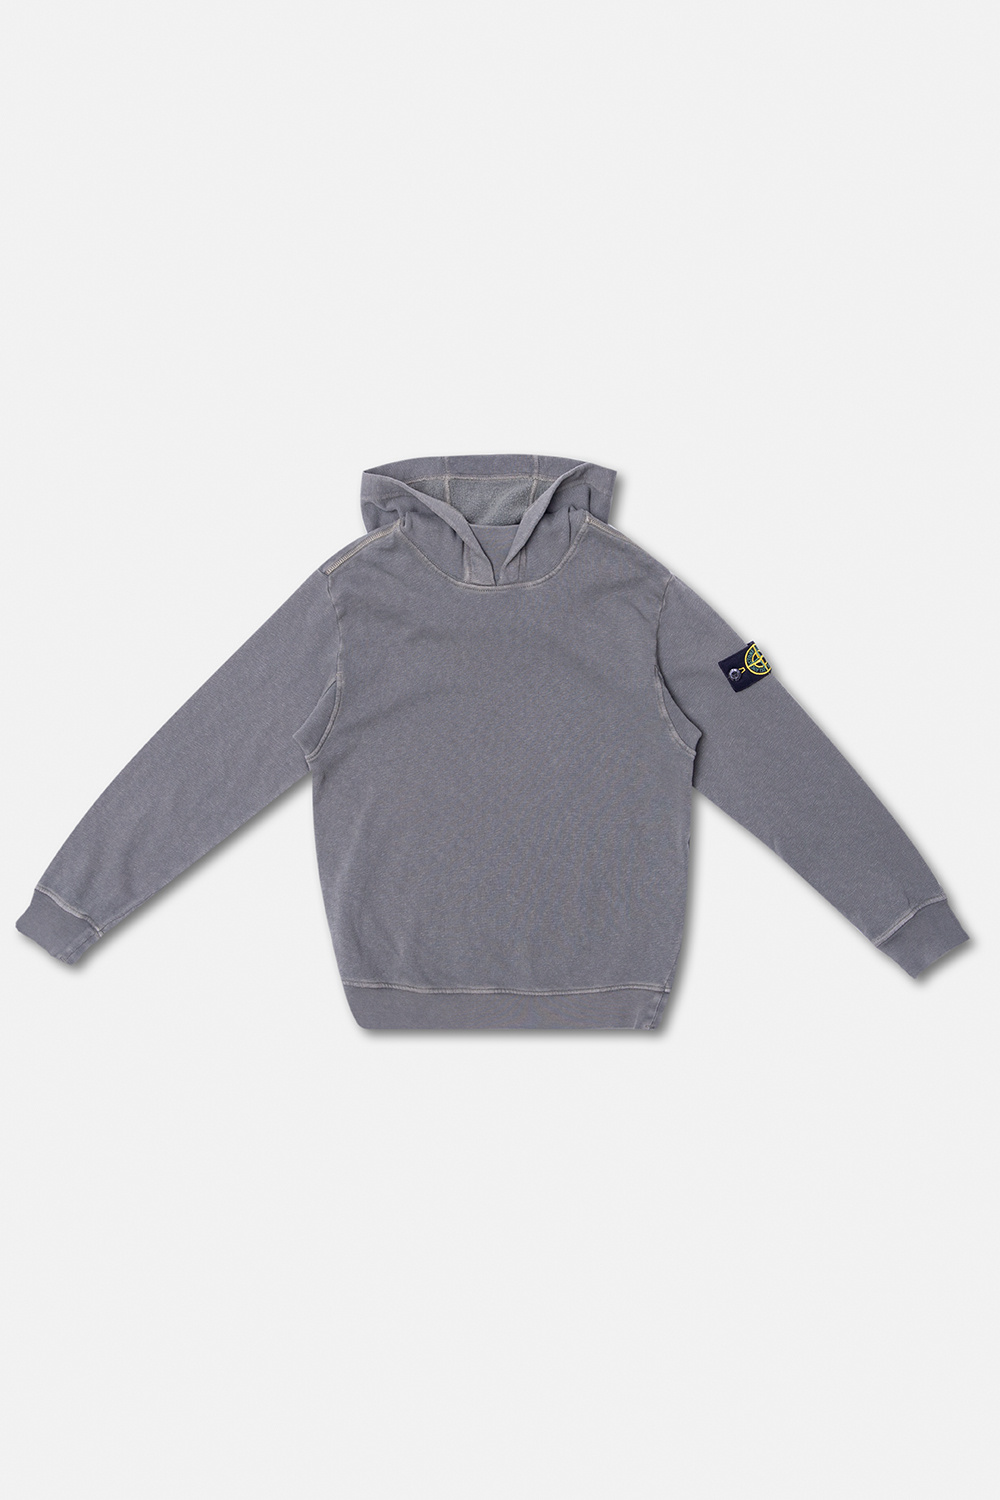 Stone Island blurred logo print T-shirt Patched hoodie